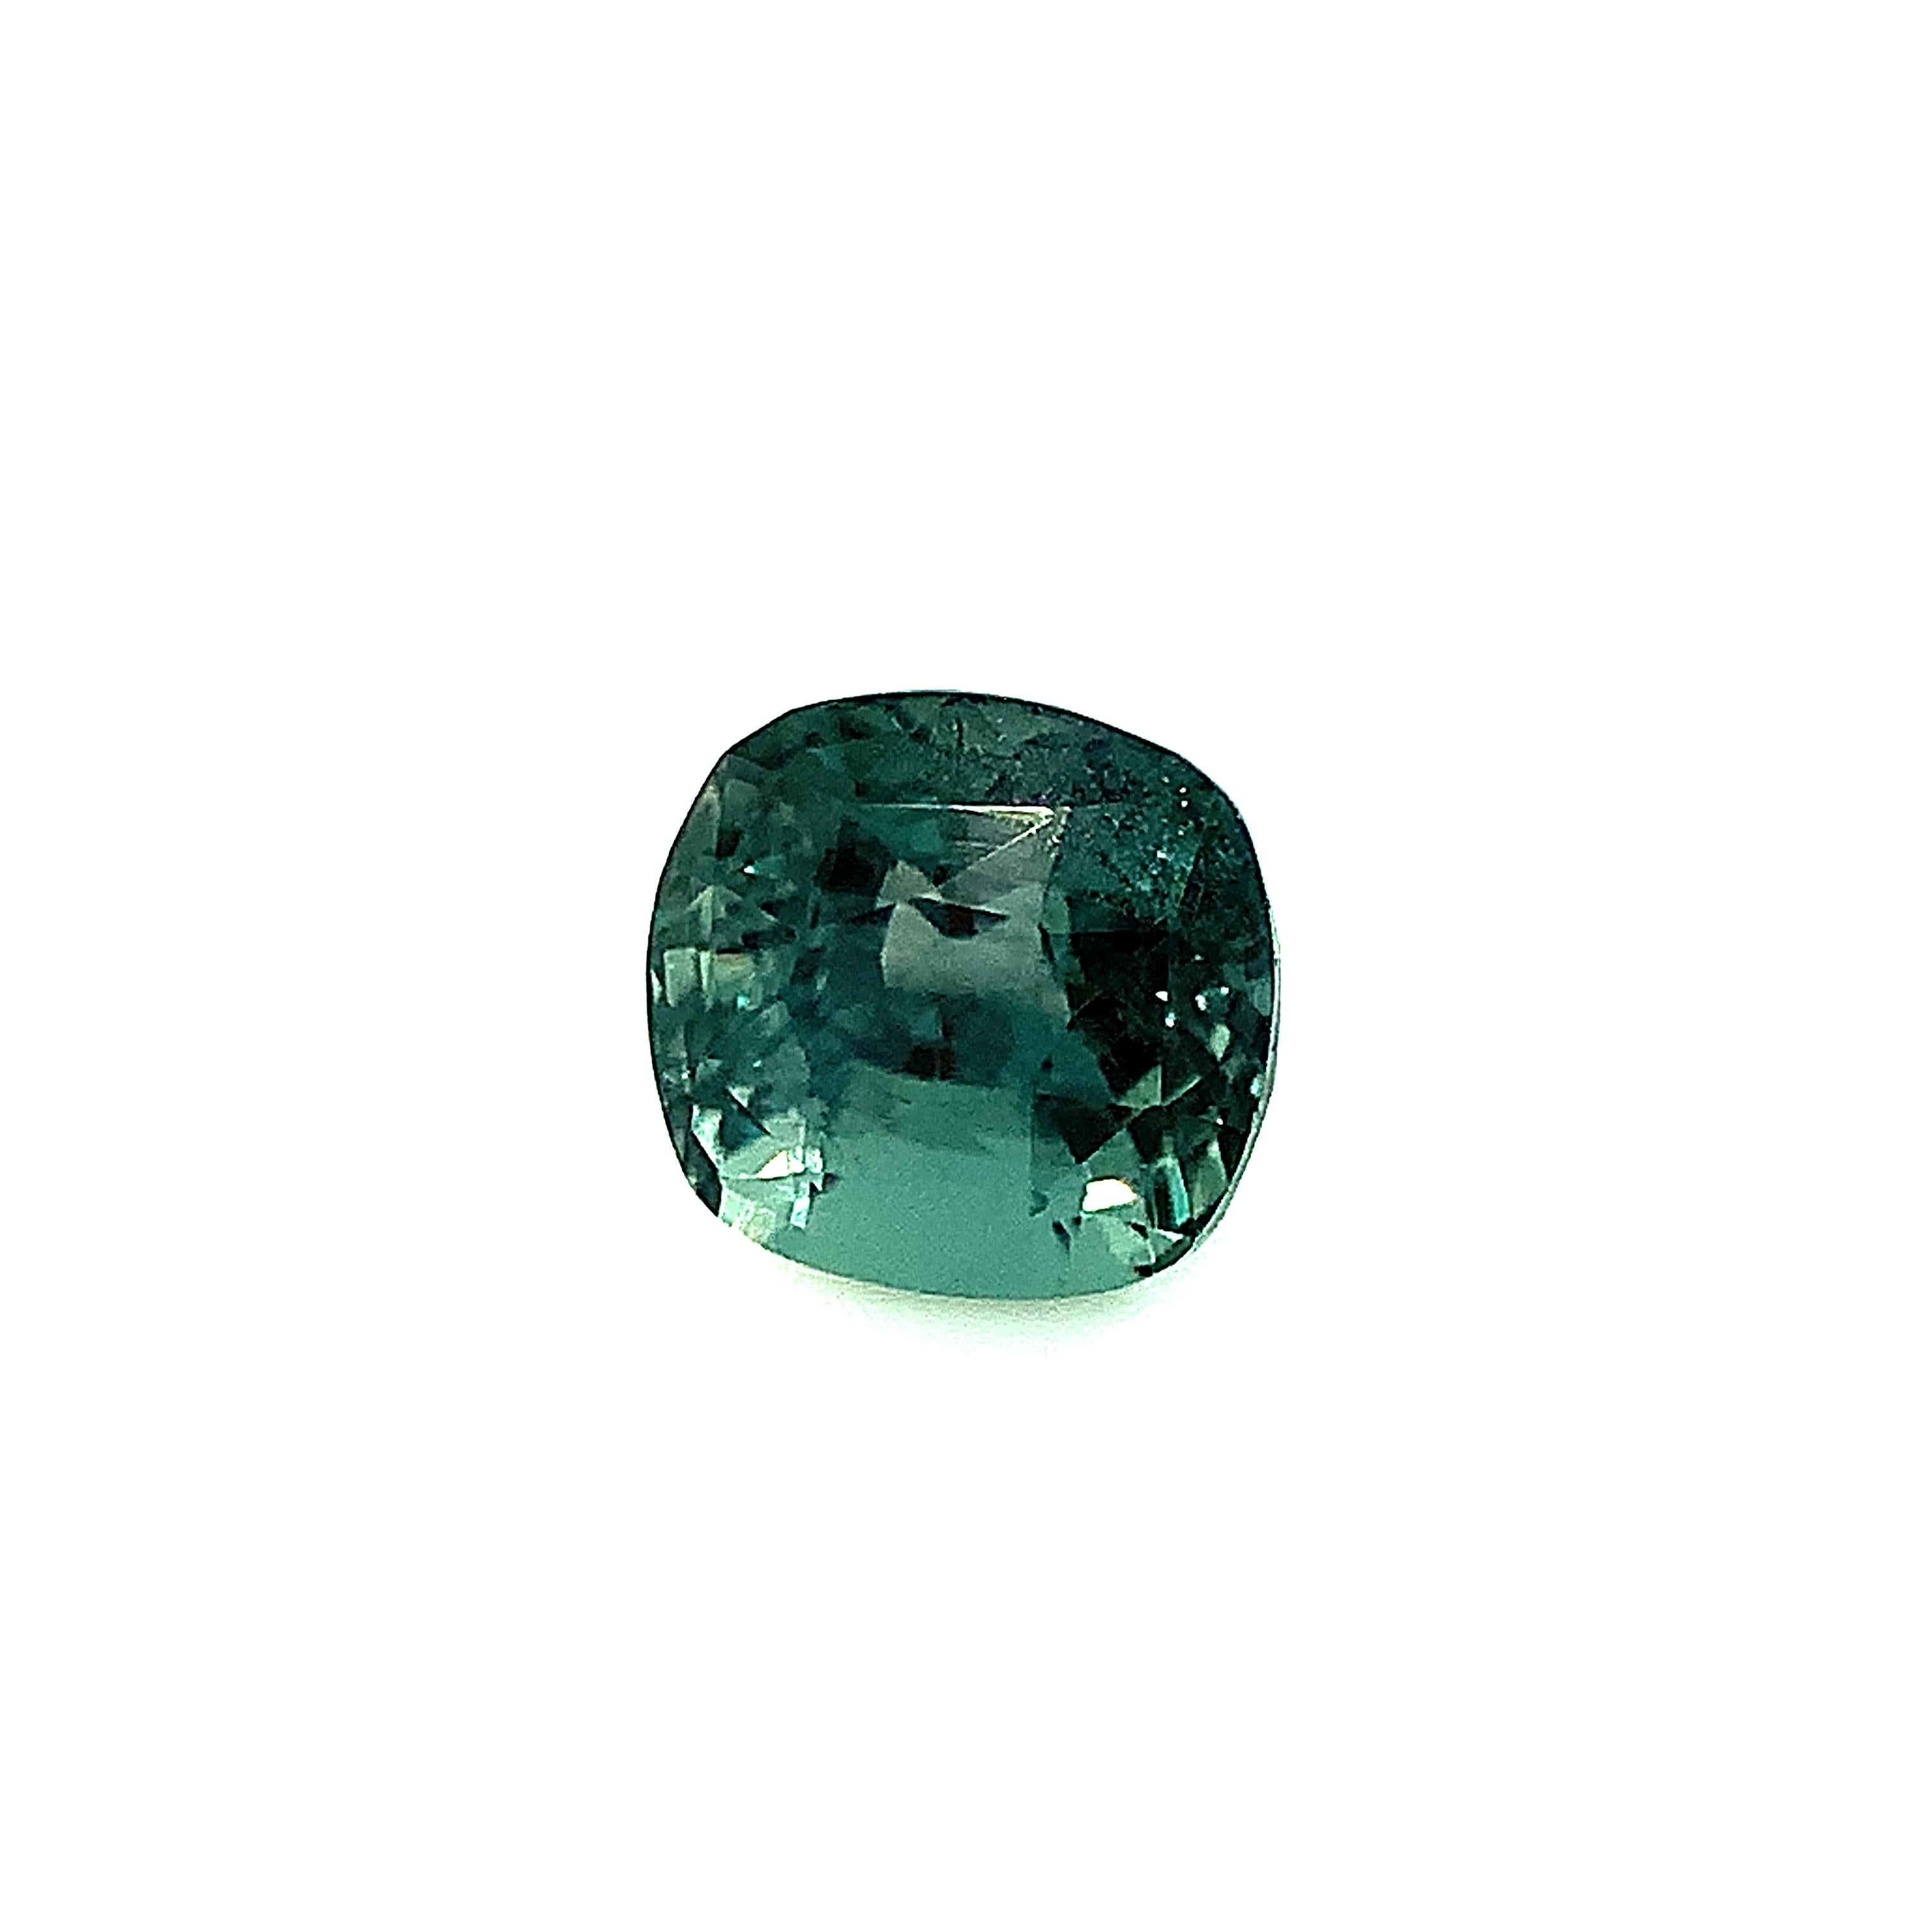 Pierre précieuse non sertie d'Alexandrite chrysobéryl de 1,16 carat, certifiée GIA - RTP en vente 8